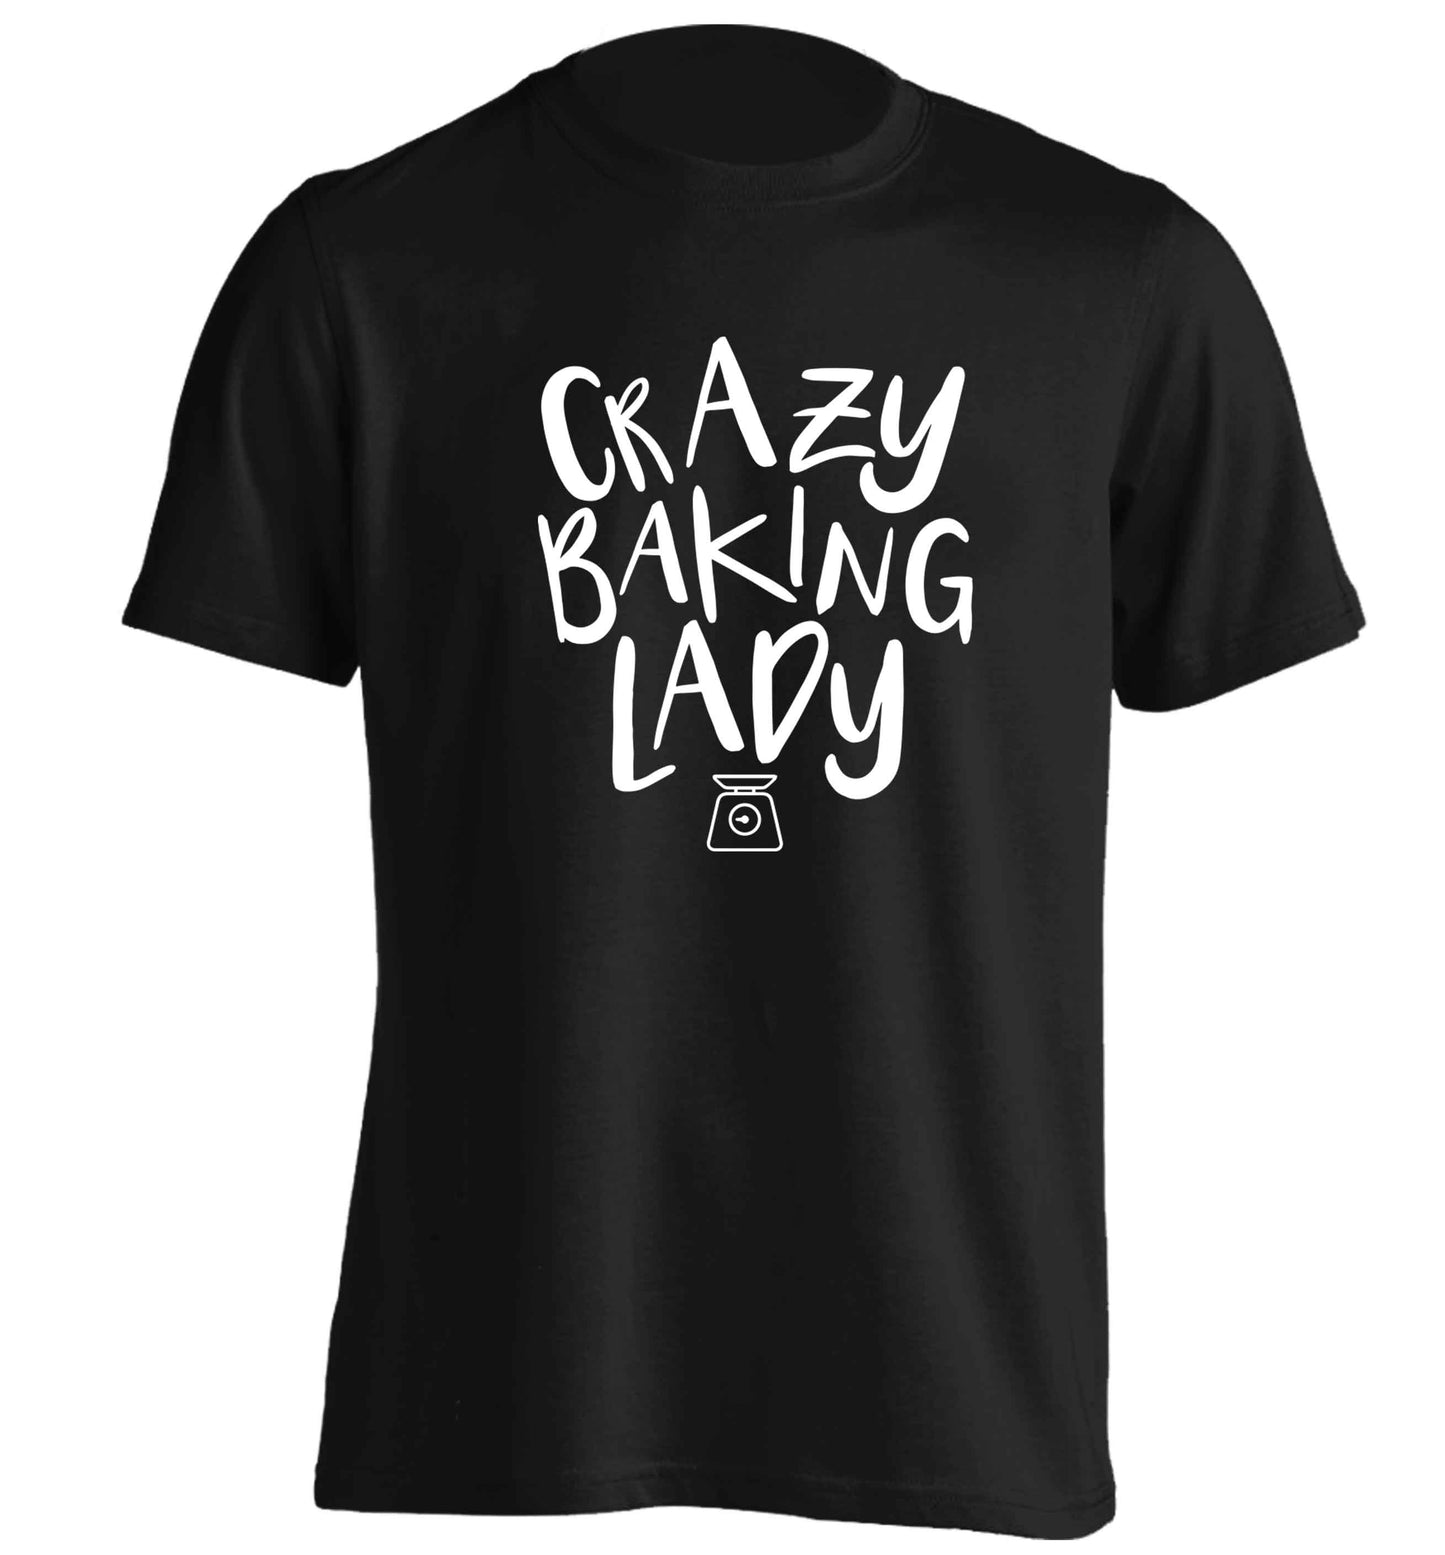 Crazy baking lady adults unisex black Tshirt 2XL